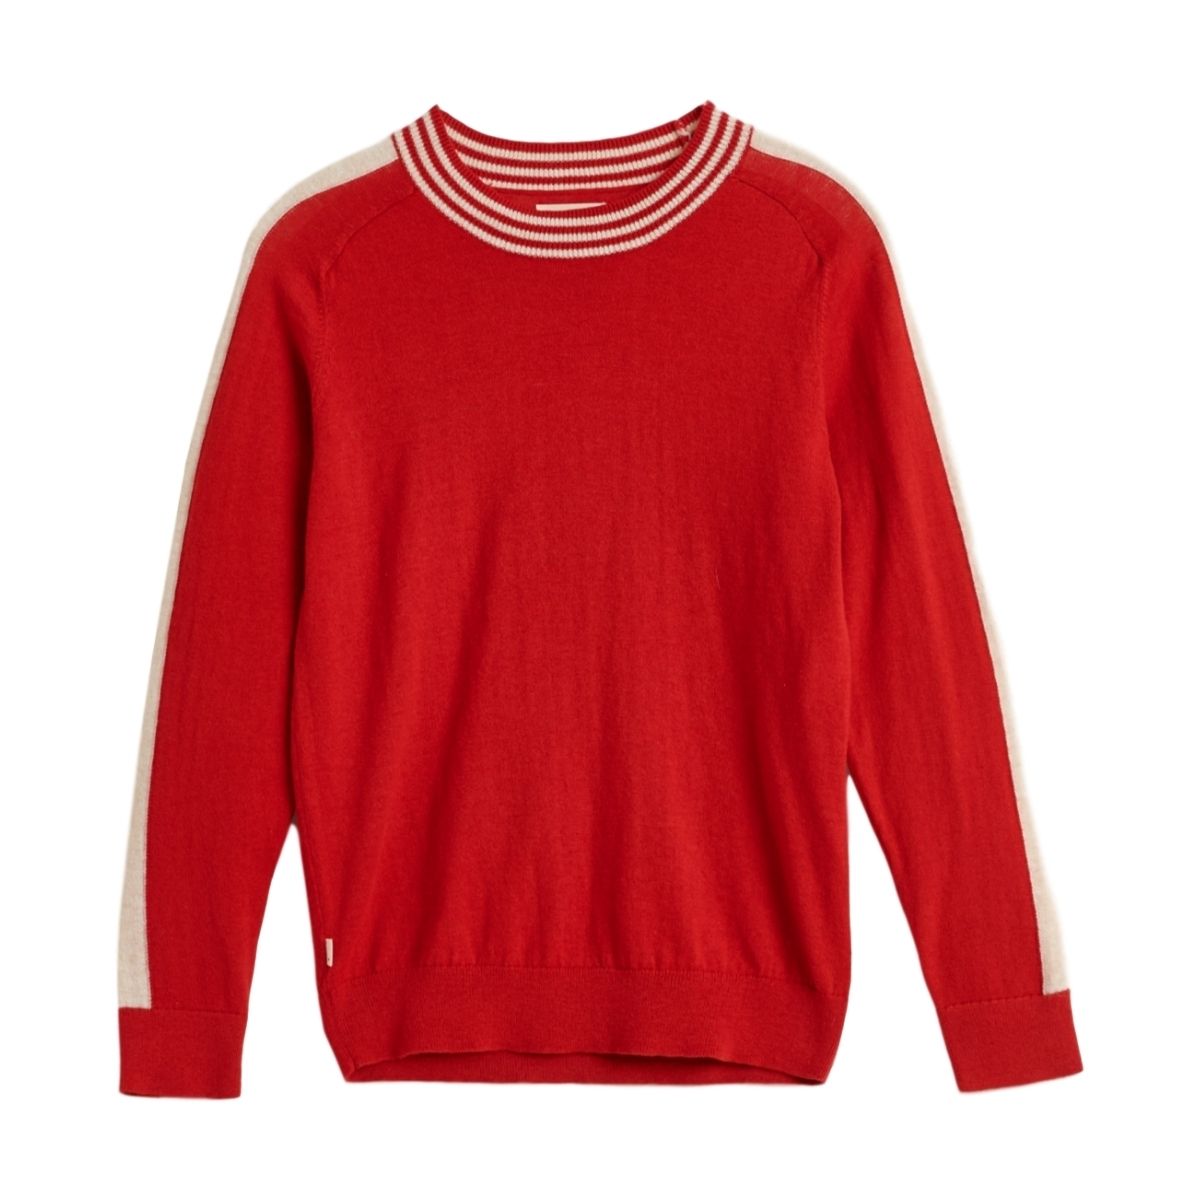 Bellerose - Sweater Goone red - セーター - BK192960 K1008F 